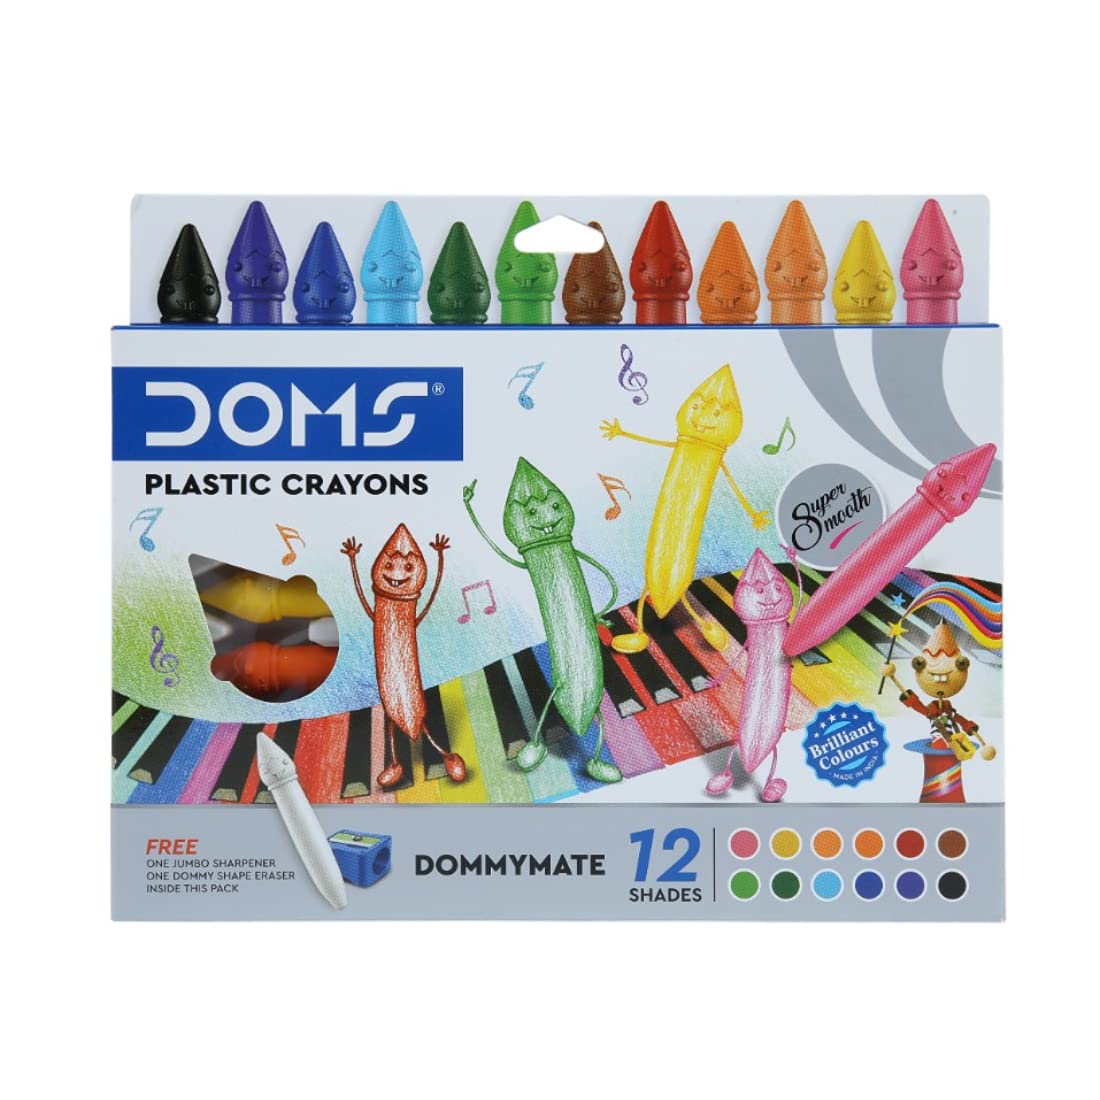 Doms Plastic Crayons 12 Shades